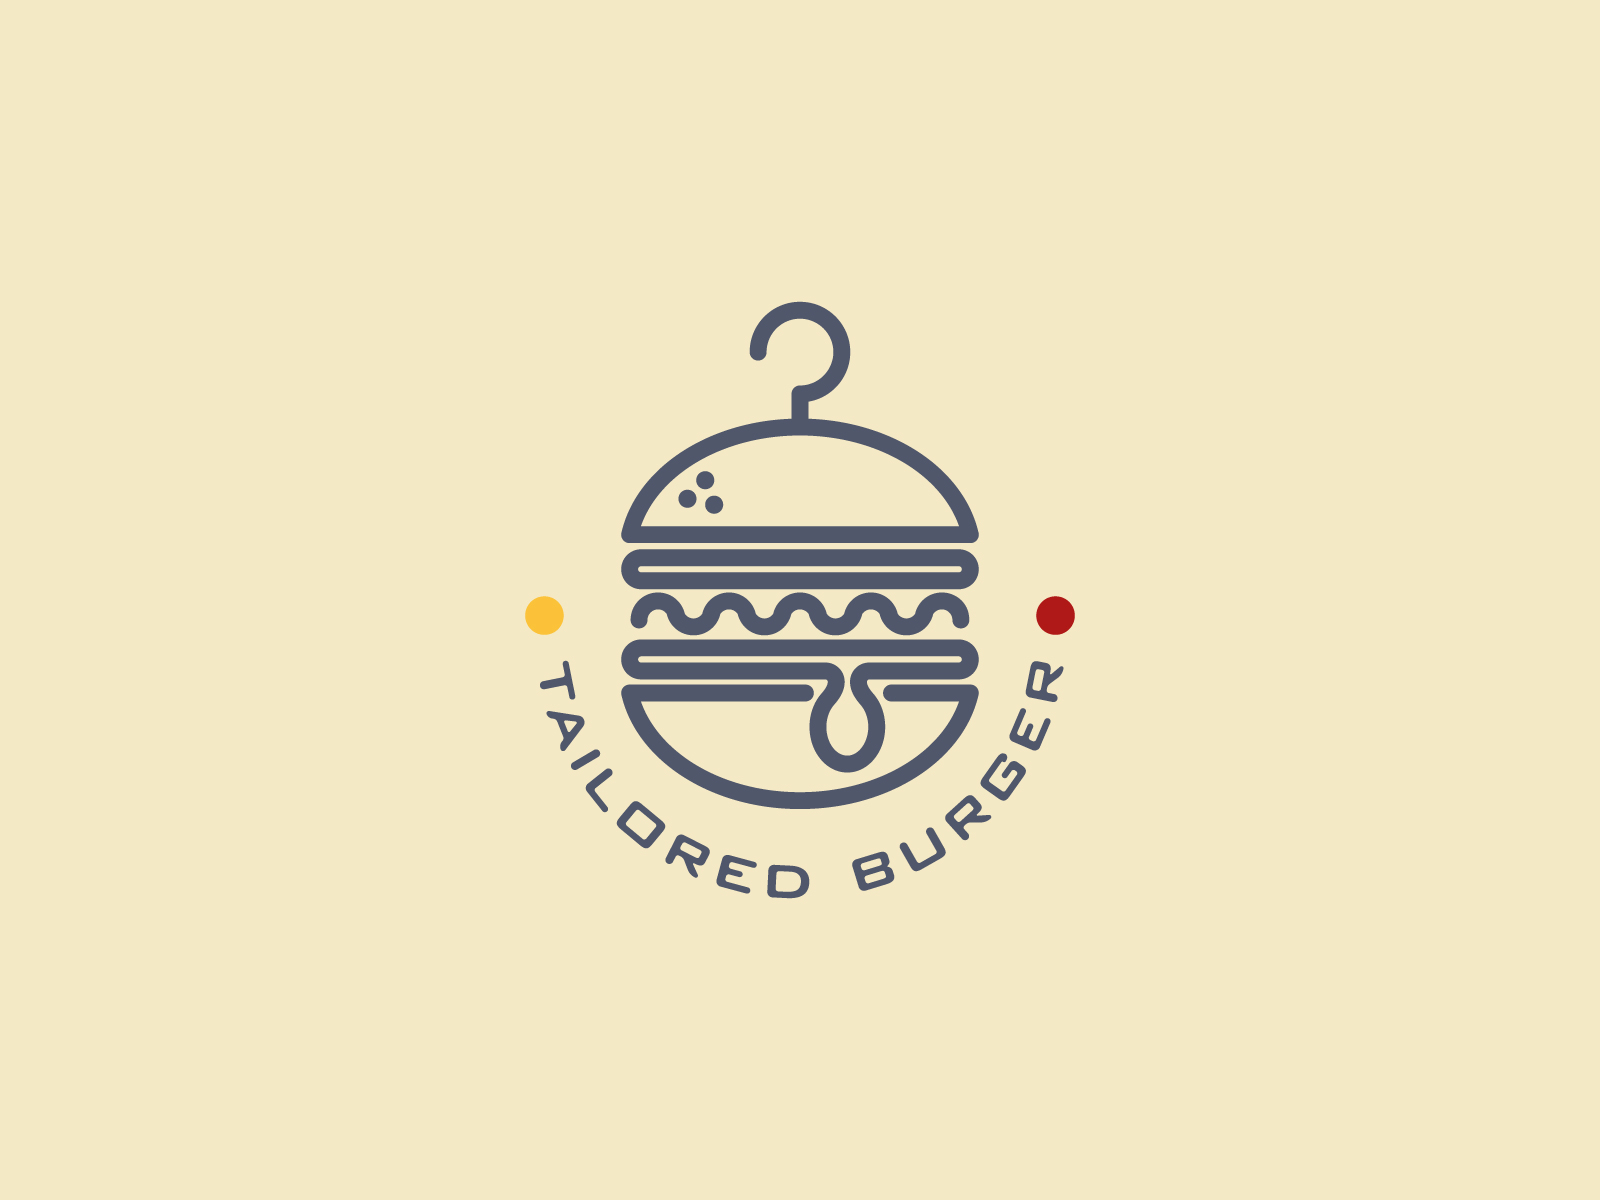 Tailored Burger by Bilal Kadic on Dribbble